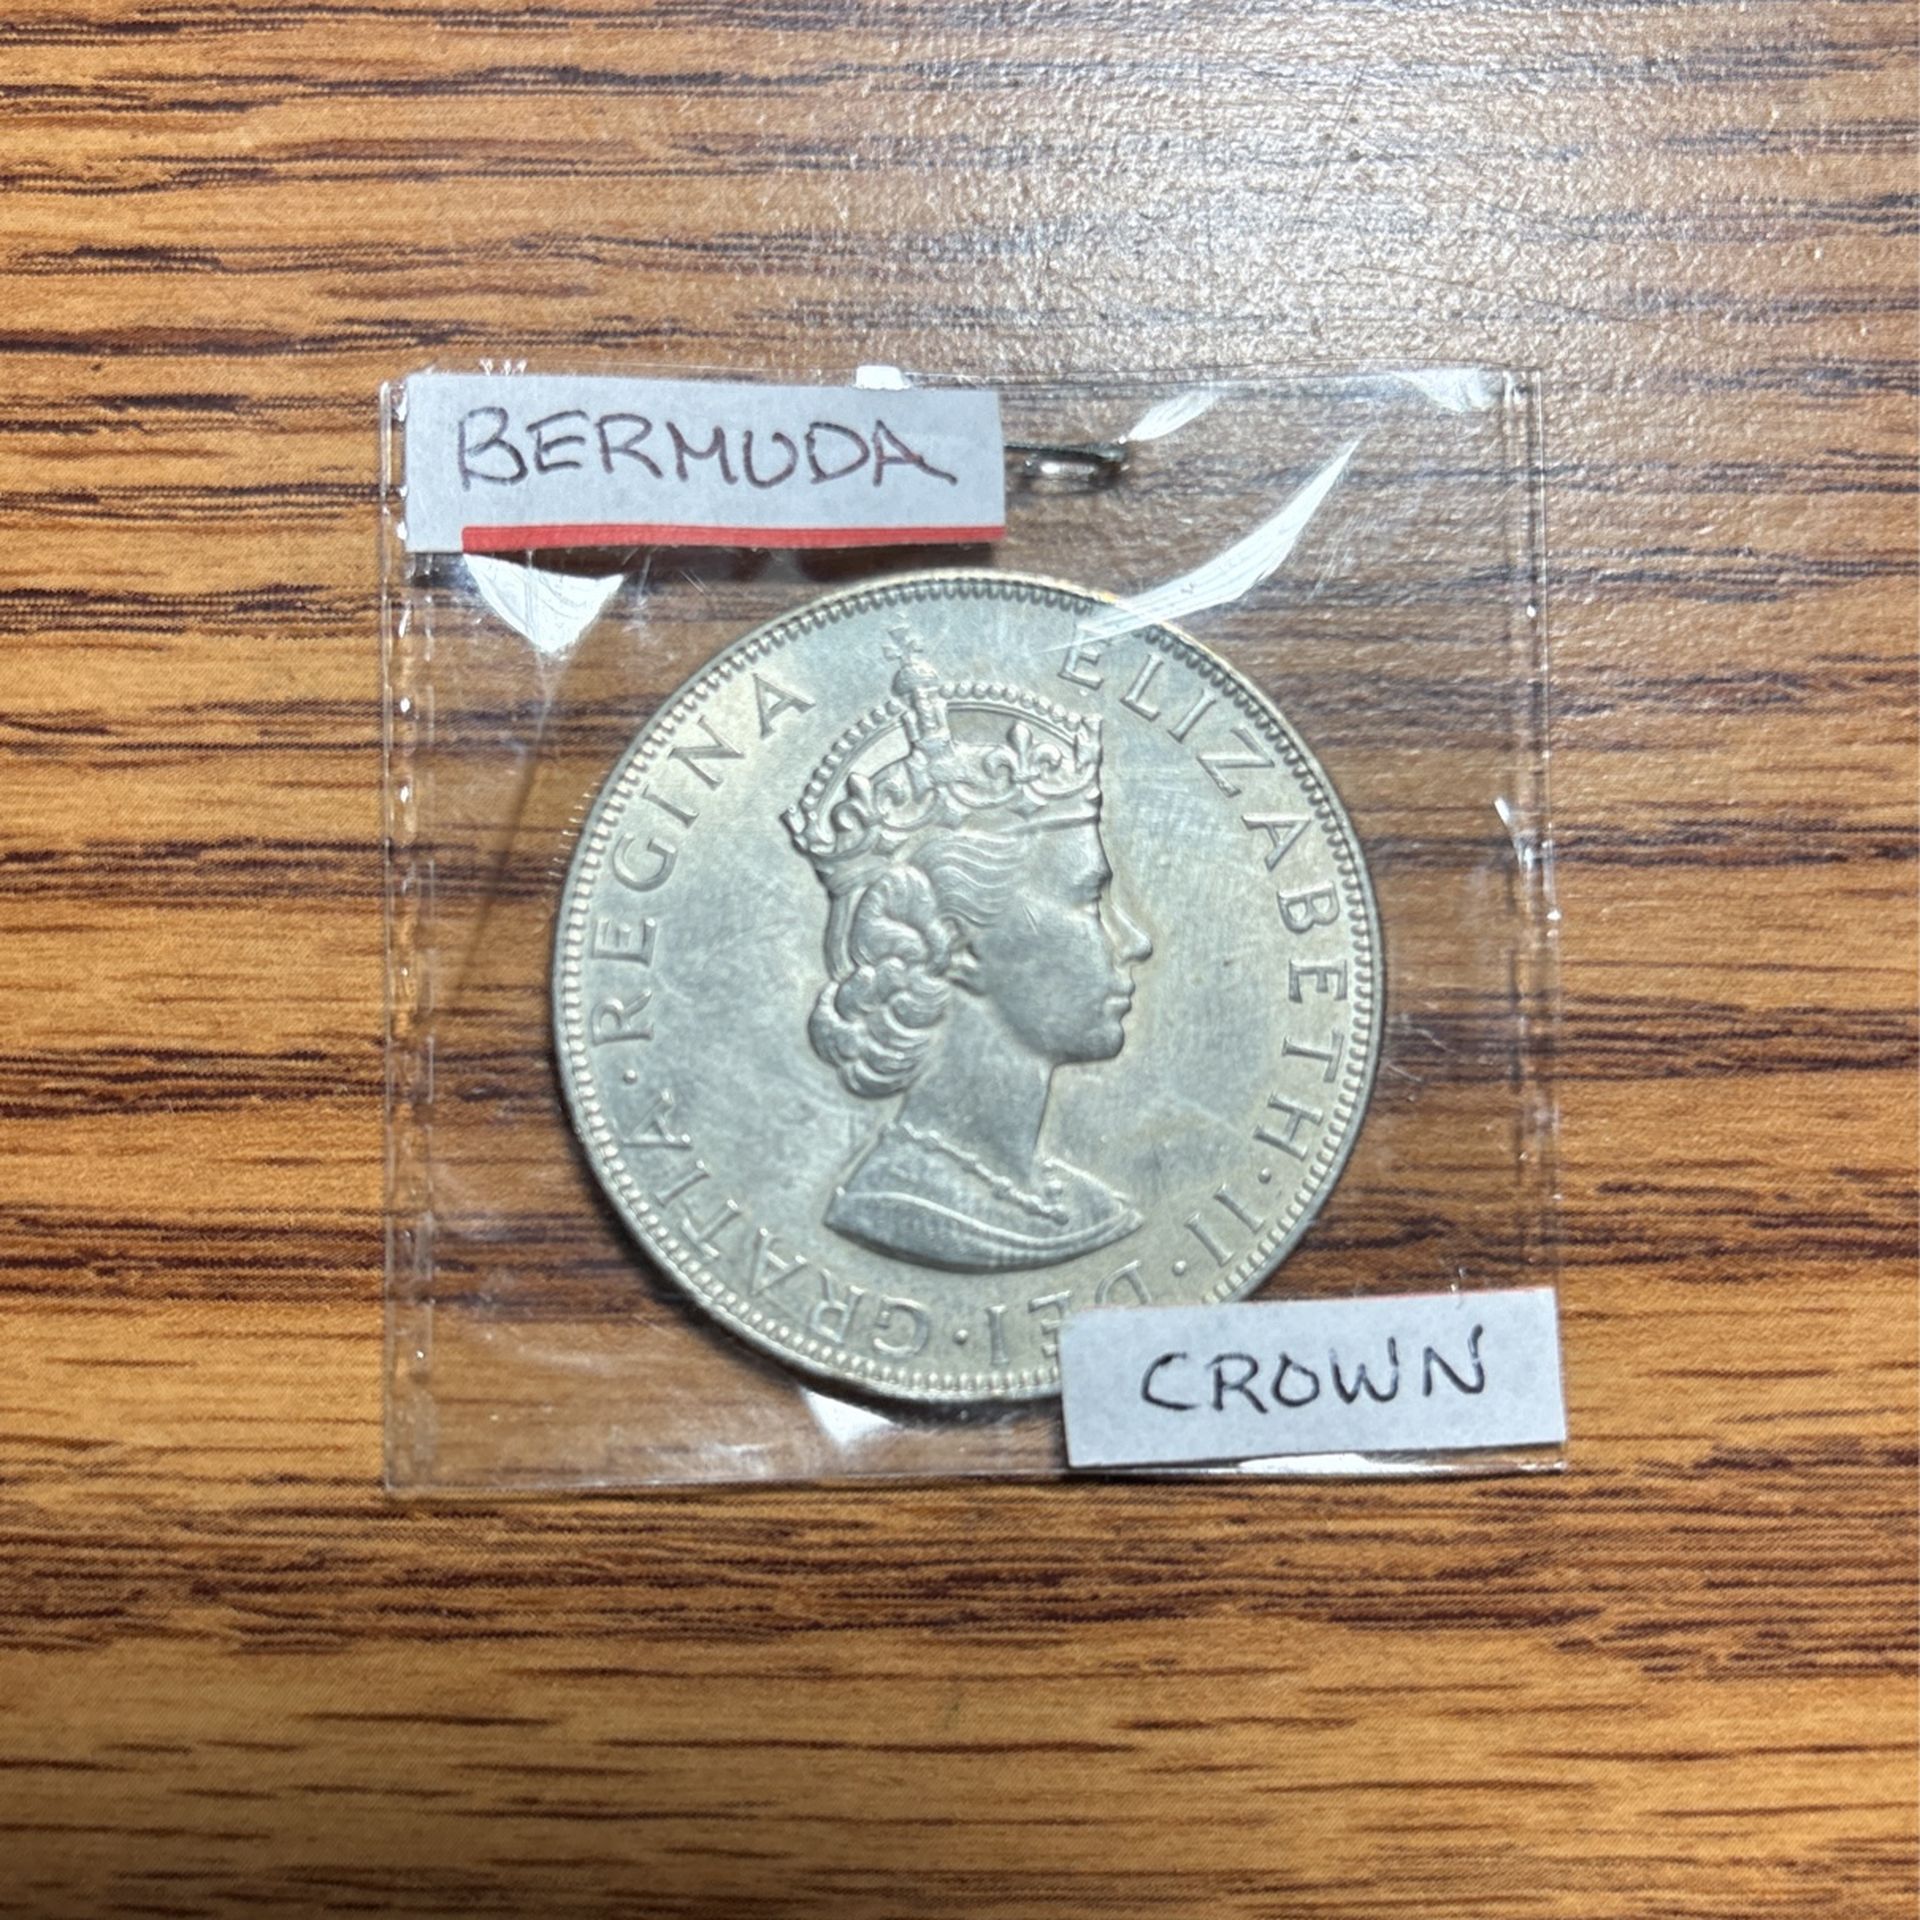 1964 Silver Bermuda Crown